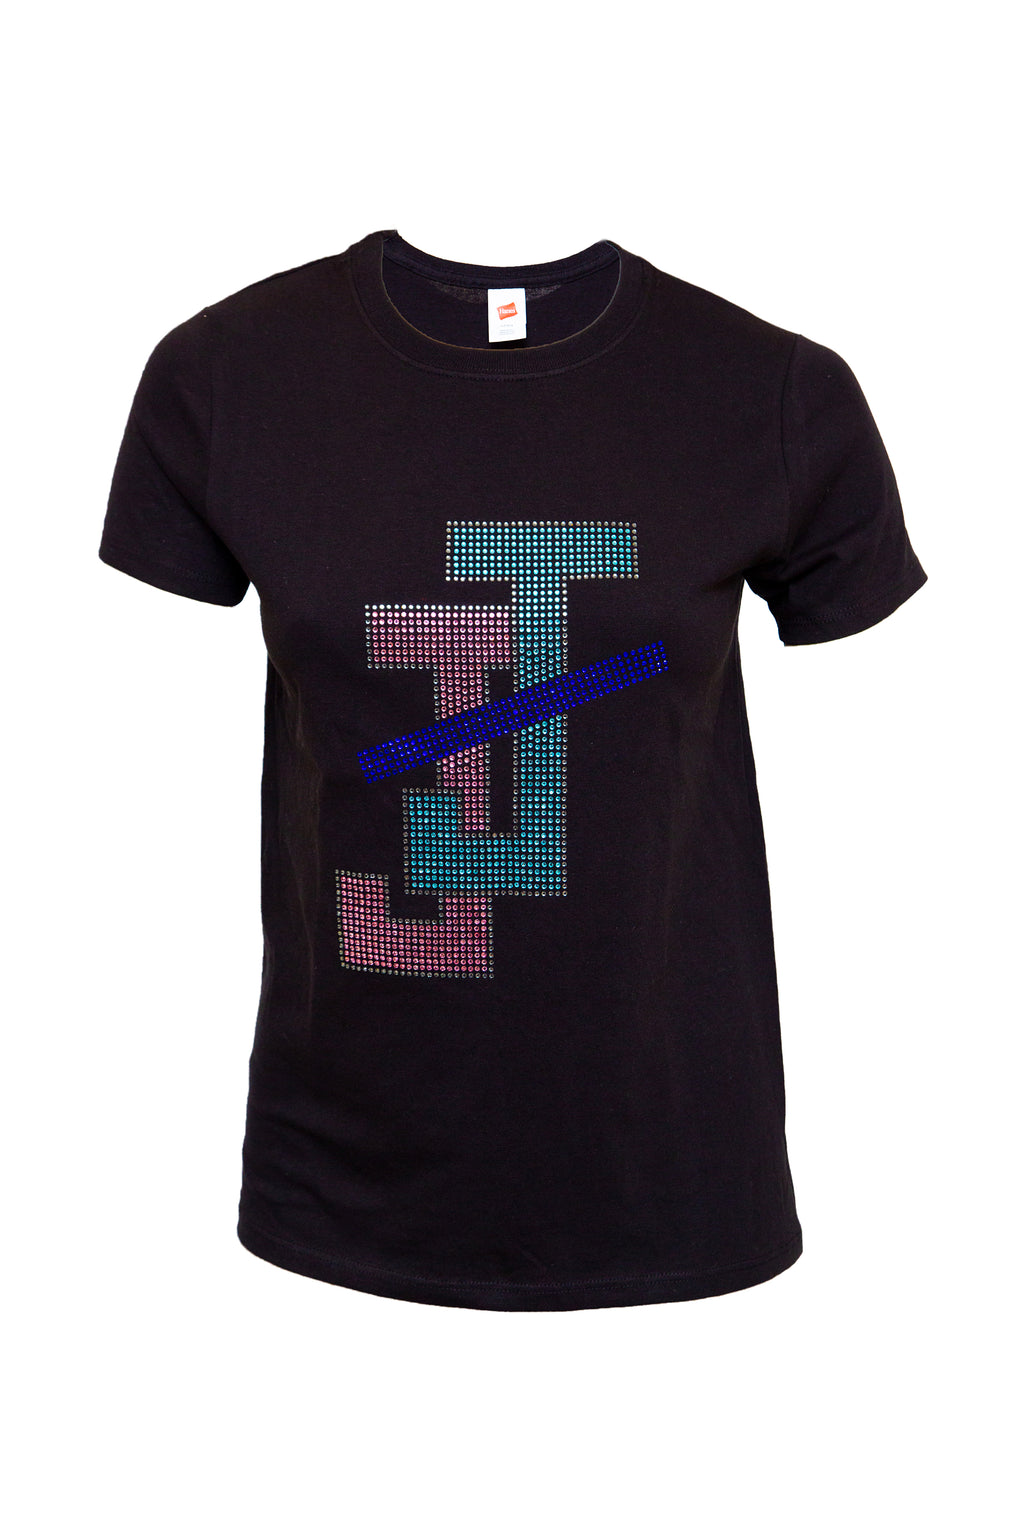 Jack and Jill Bling shirt (JnJ Interlocking Design)